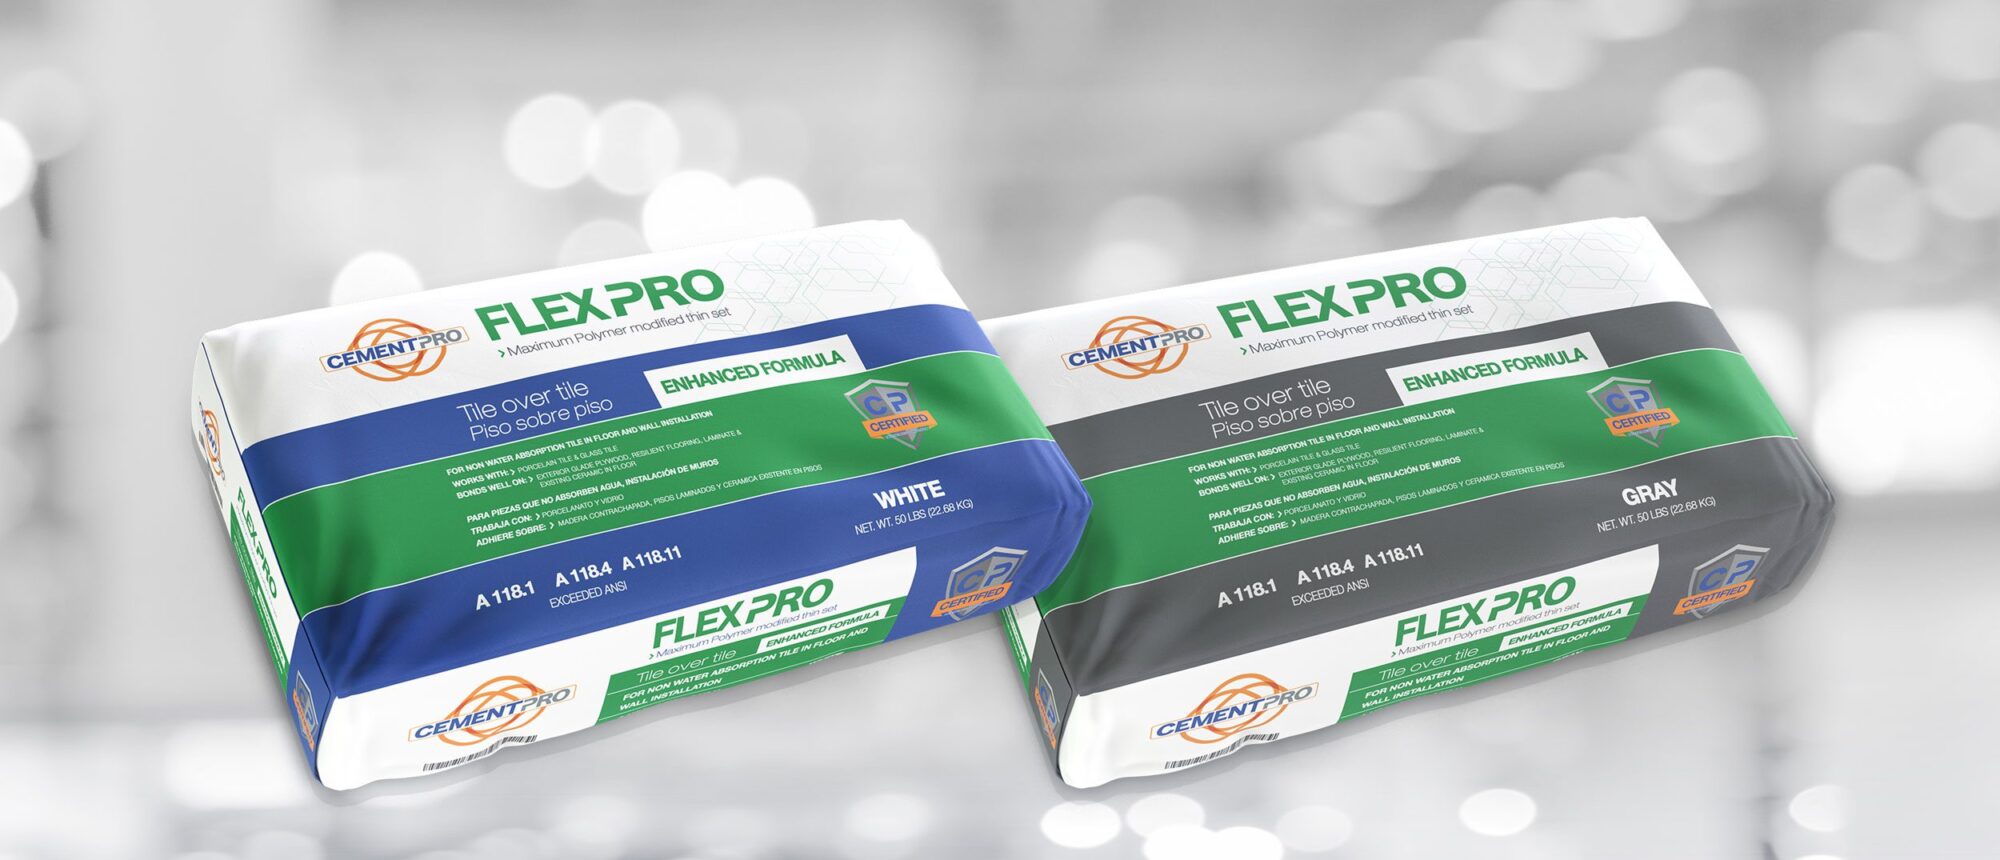 Flex Pro Product